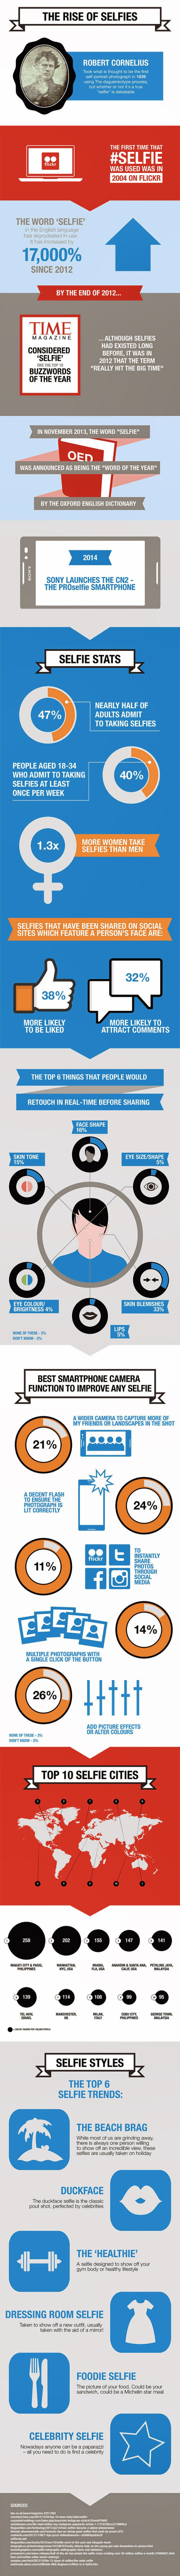 infographie-selfie-2014